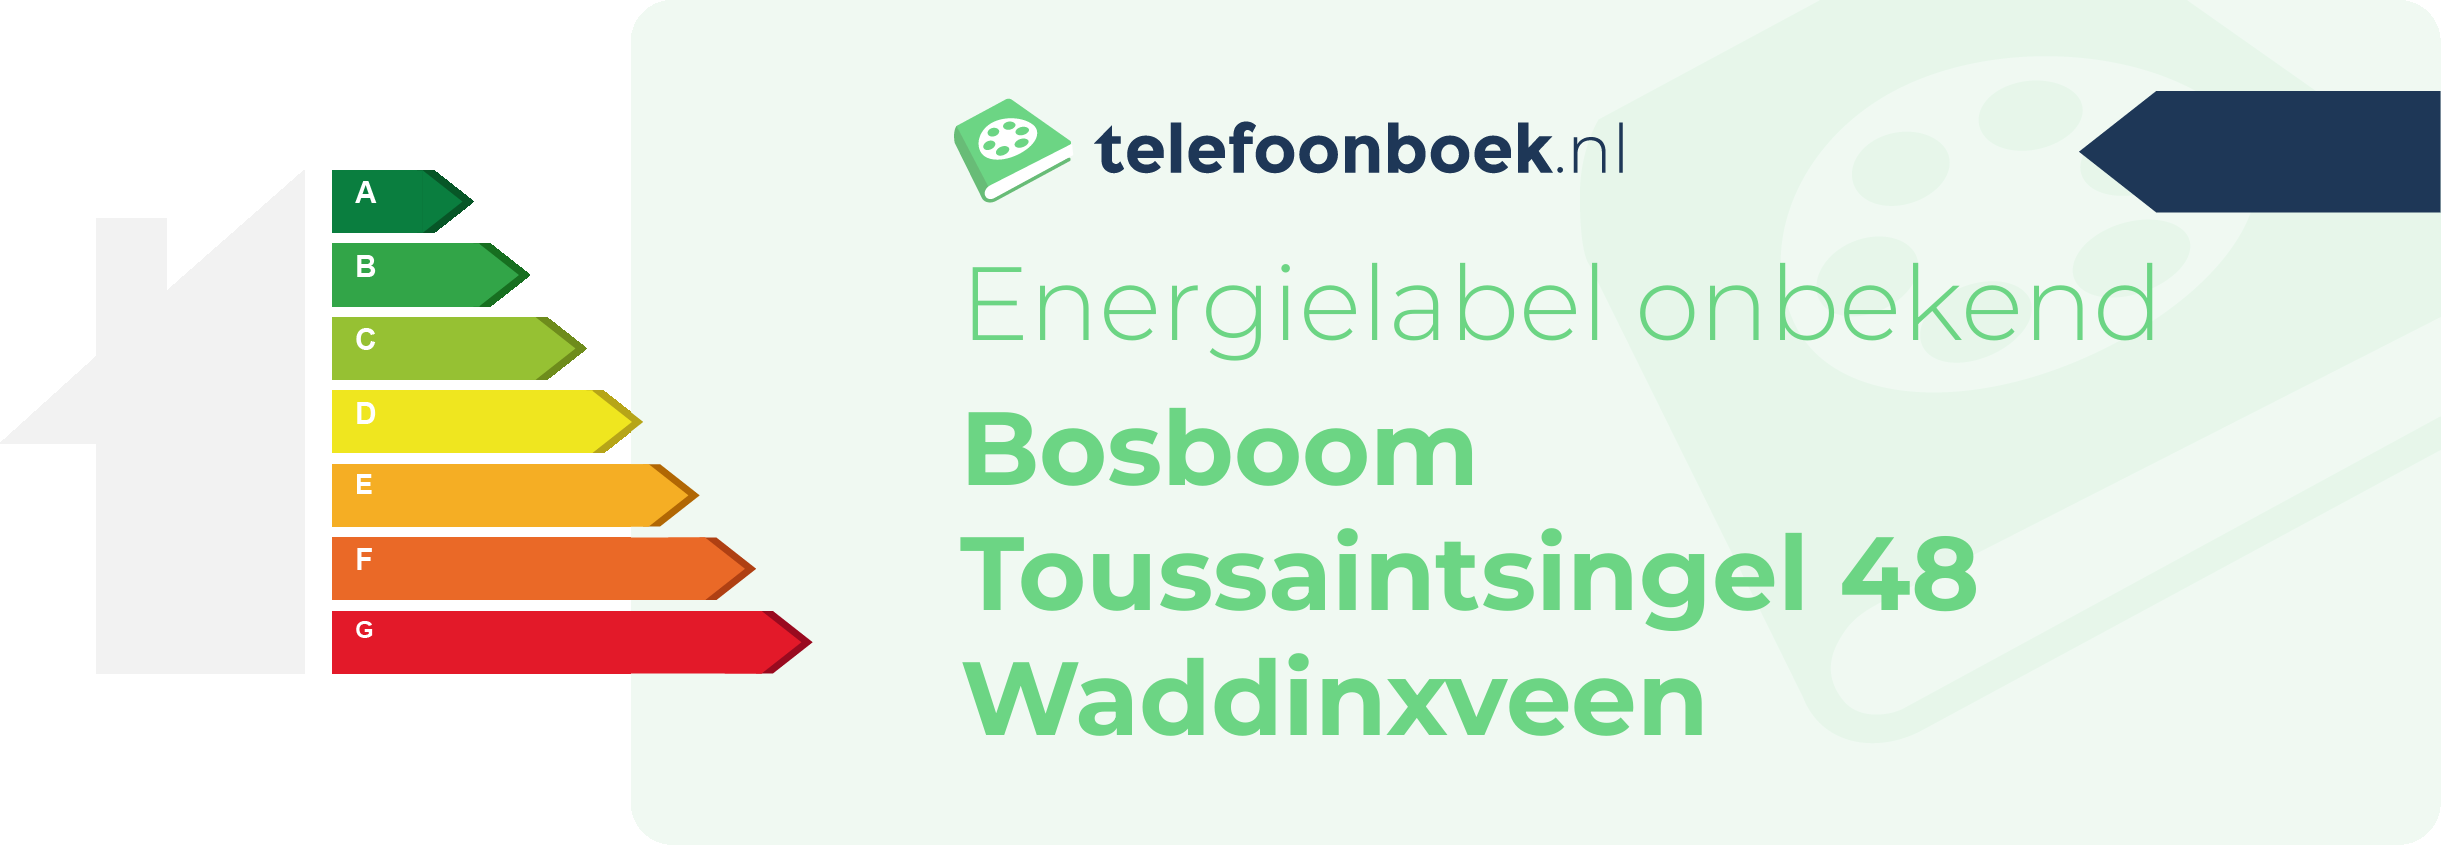 Energielabel Bosboom Toussaintsingel 48 Waddinxveen